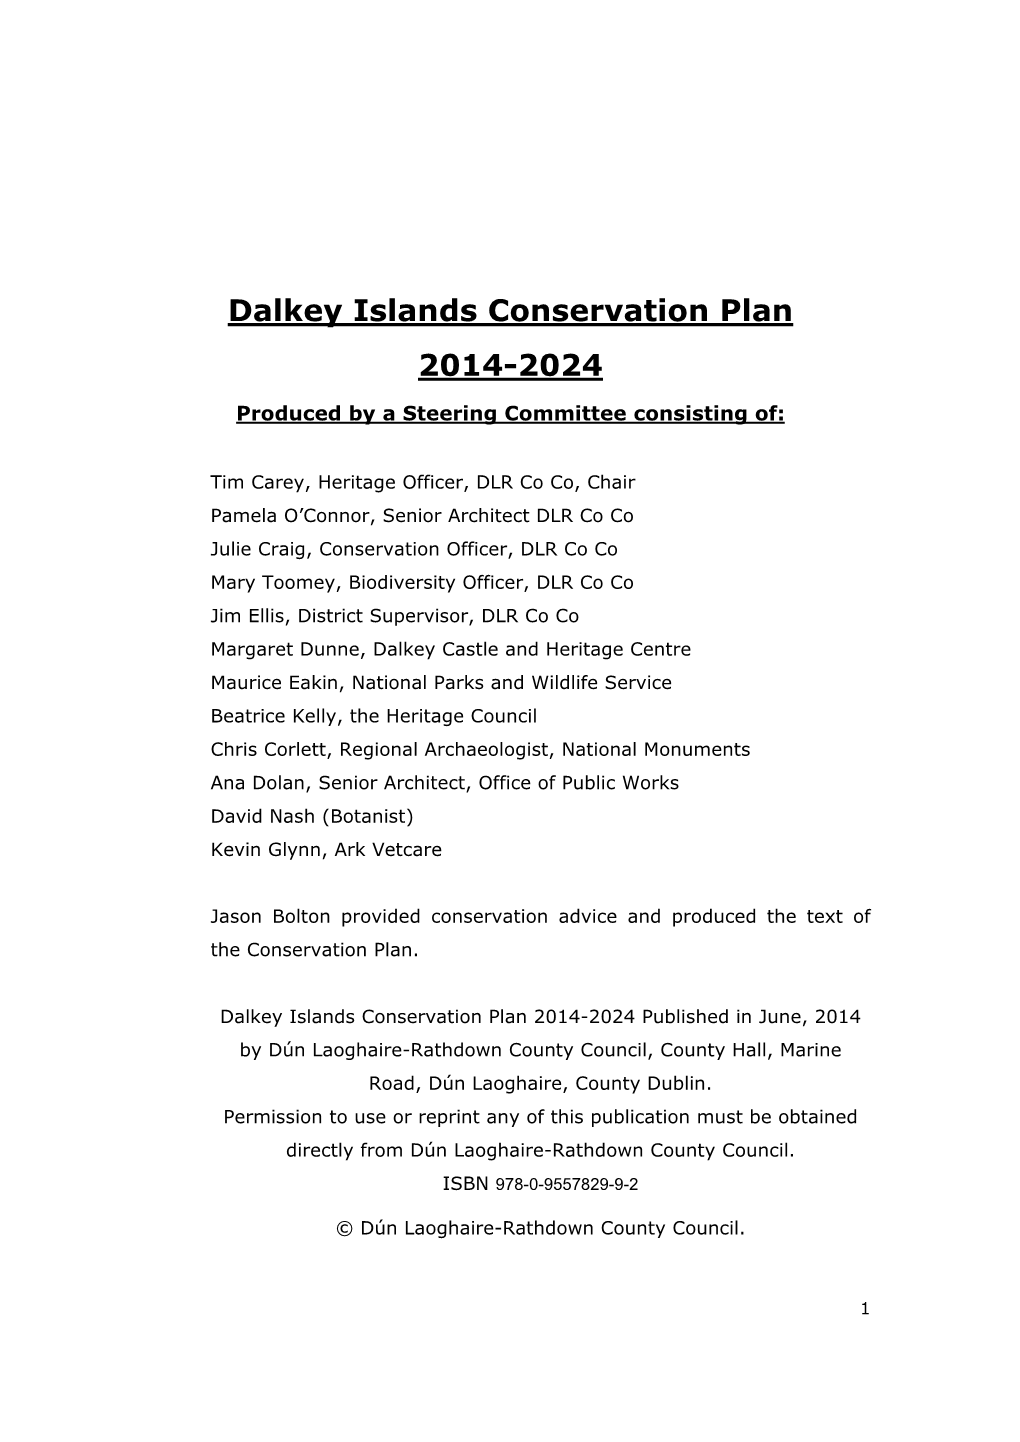 Dalkey Islands Conservation Plan 2014-2024